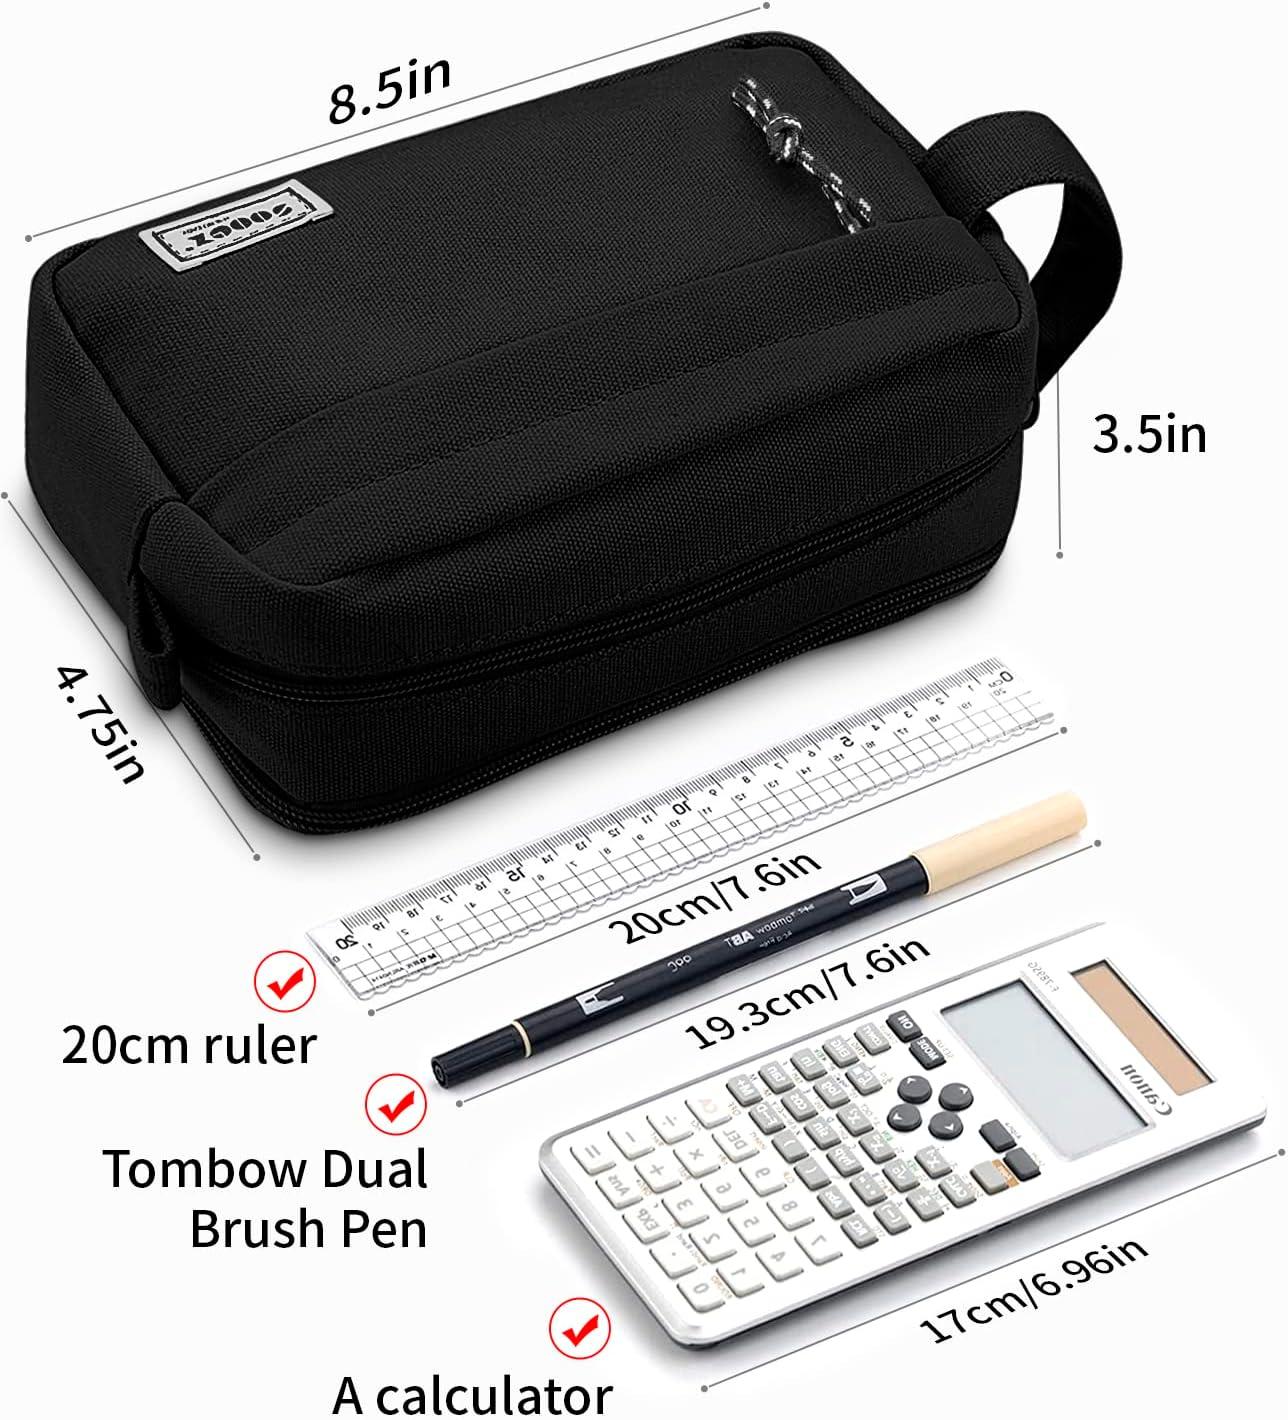 Back to School Pencil Case, Mini Pencil Pouch, Cute School Supplies for  Organization, School Pencil Box, Aesthetic School Supplies 